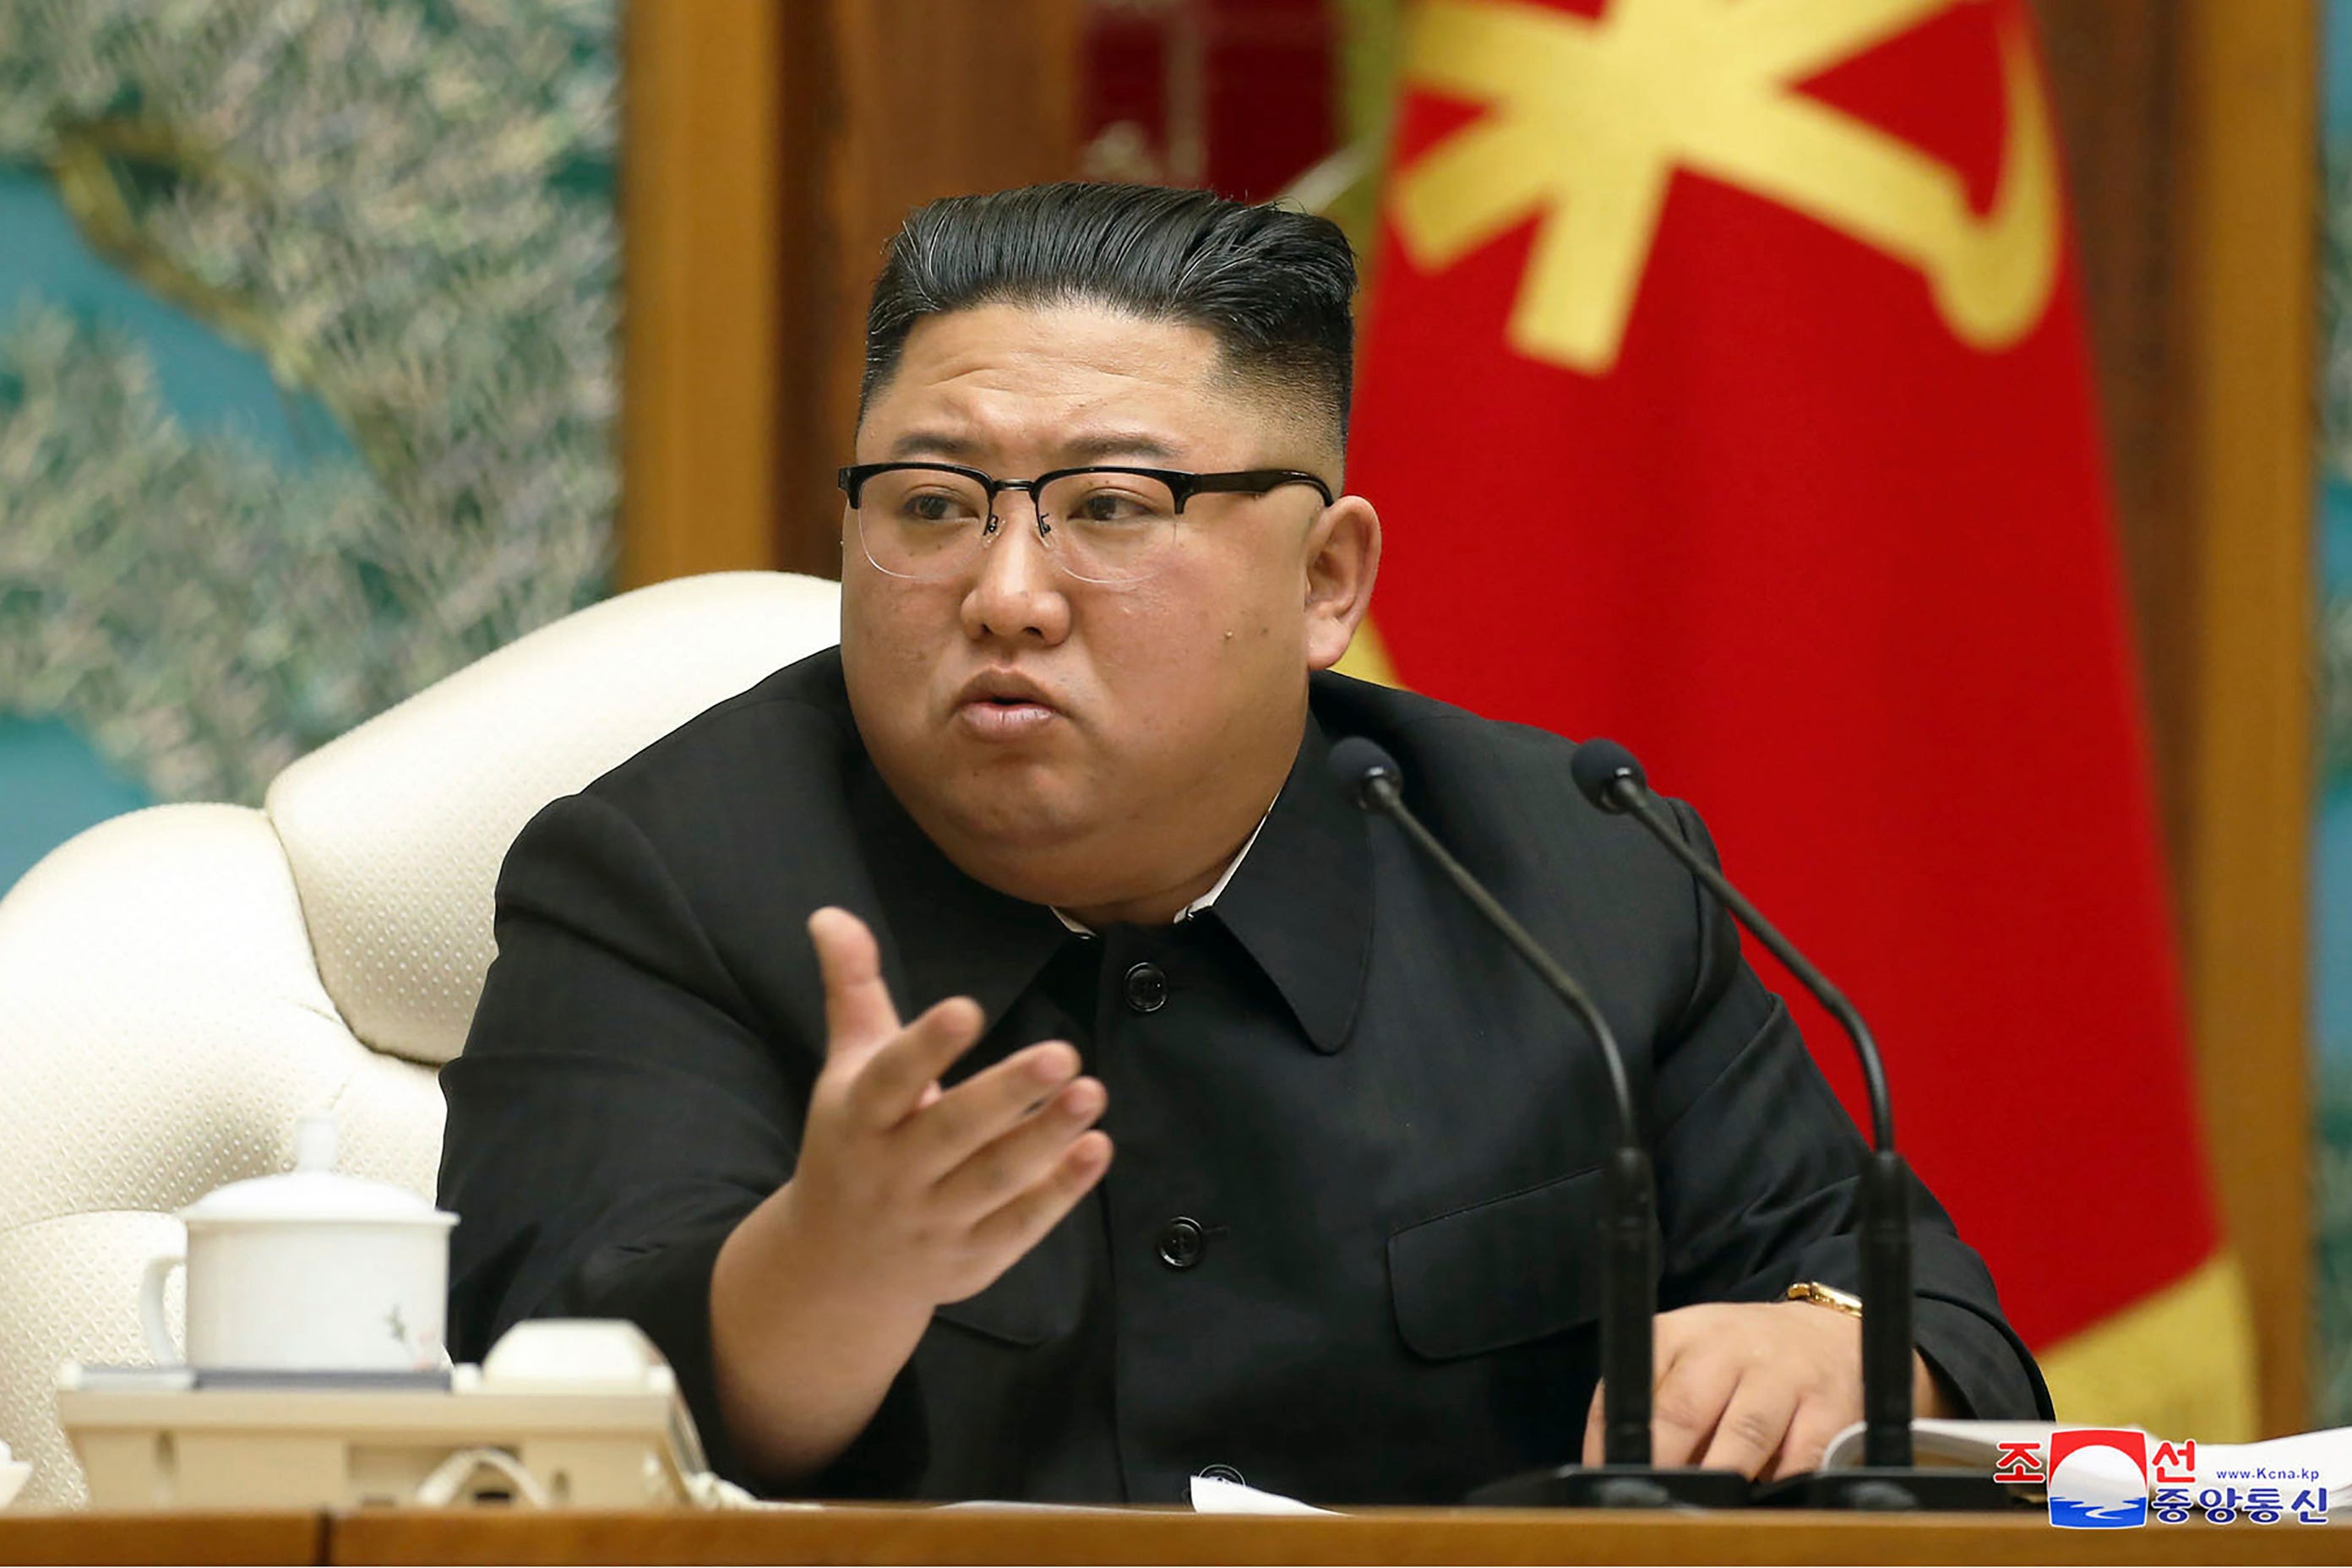 South Korea says North Korea Kim Jong Un executed people amid COVID